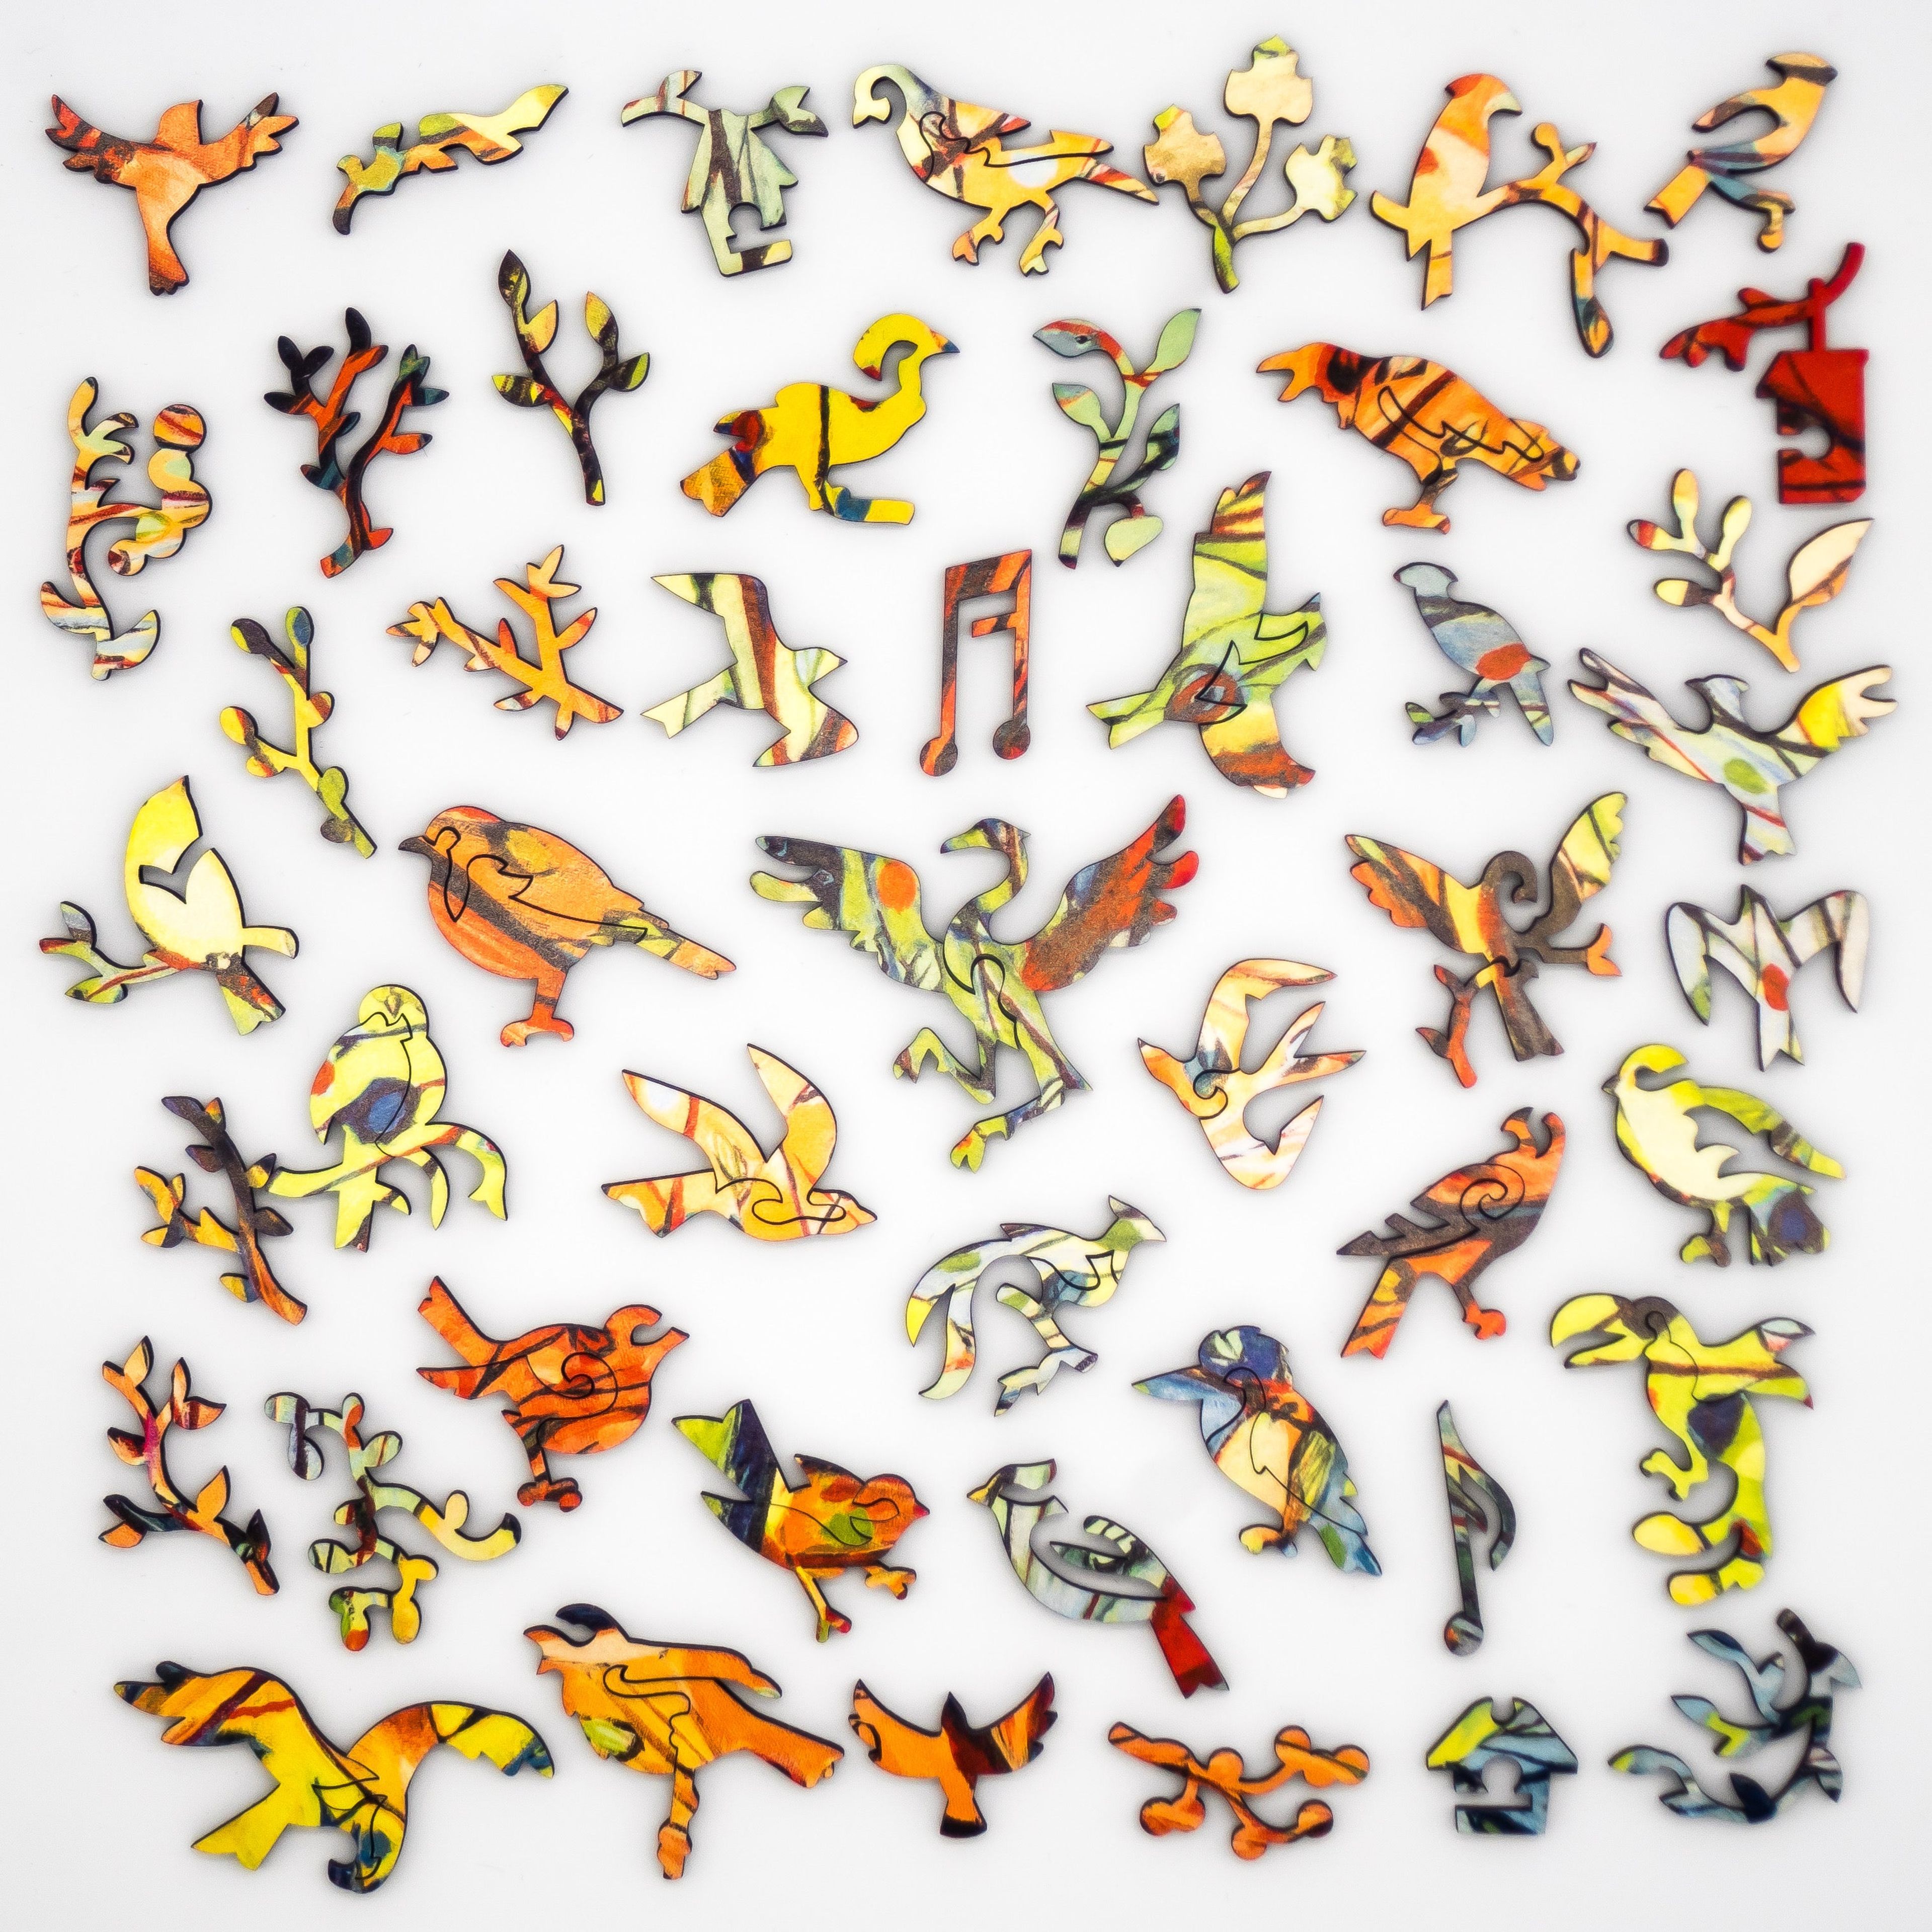 27 Birds (452 Piece Wooden Jigsaw Puzzle)